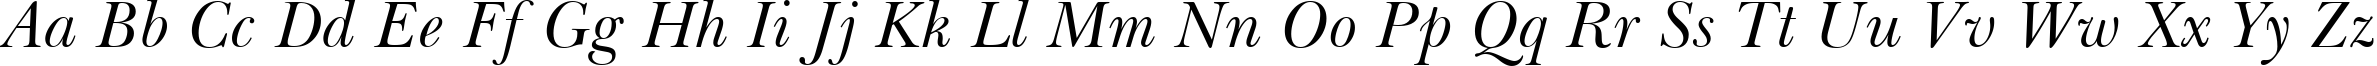 Пример написания английского алфавита шрифтом Baskerville Italic Win95BT